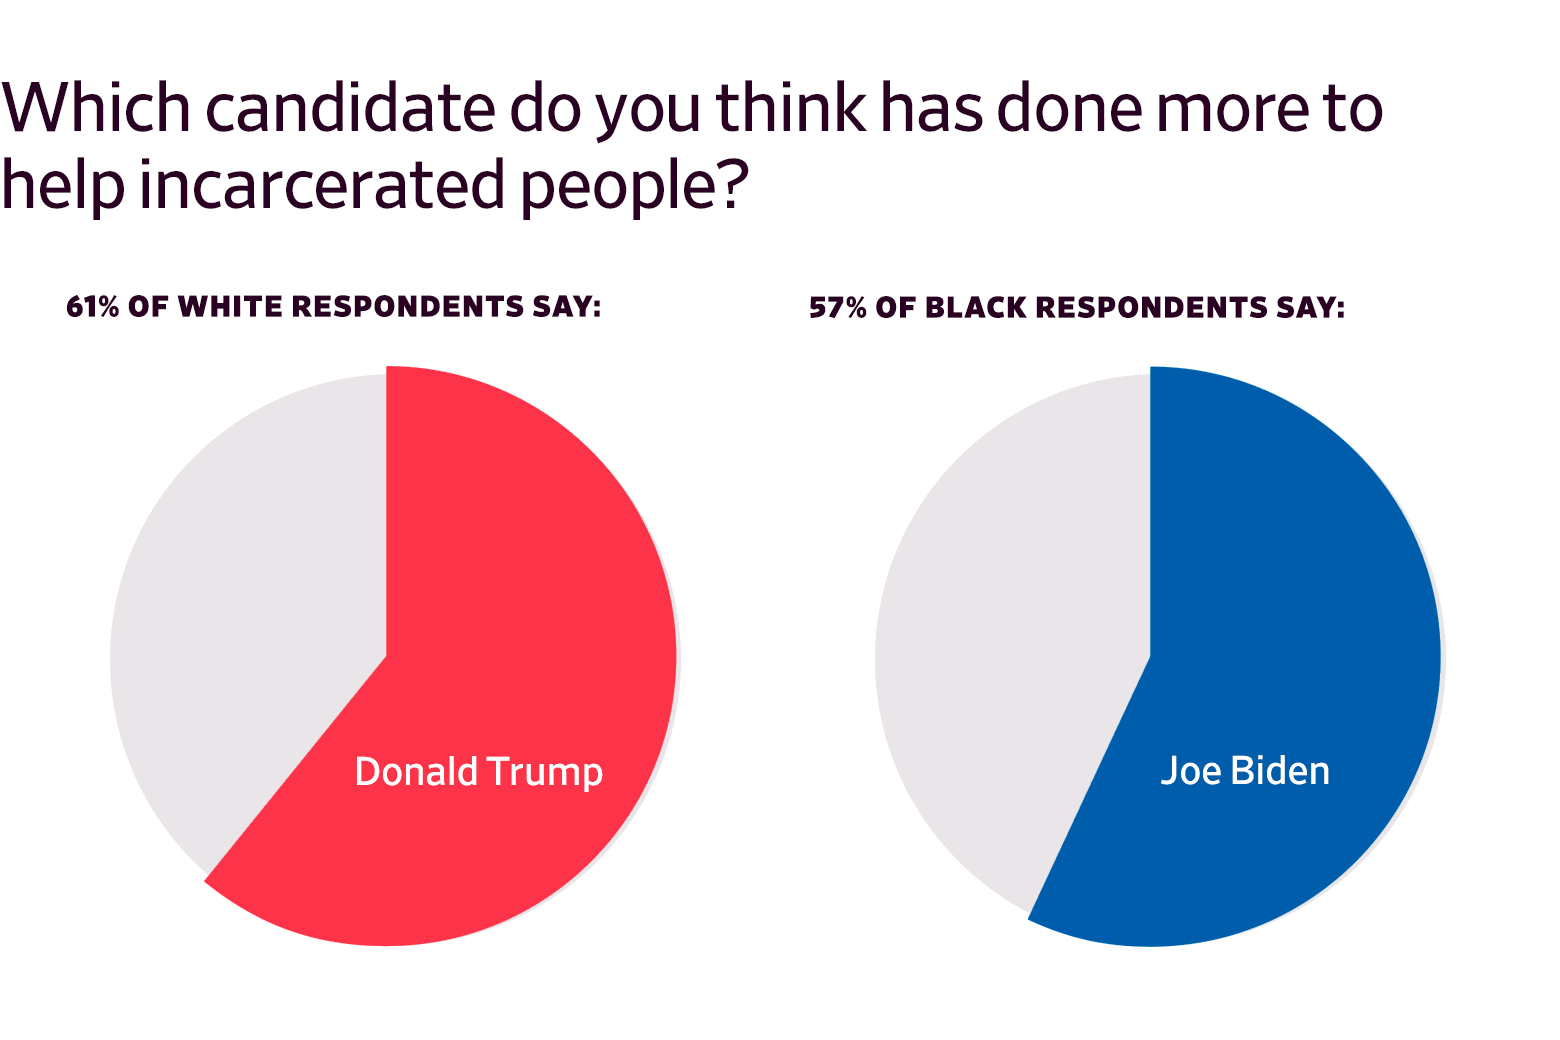 Pie charts showing prisoner survey support for Donald Trump and Joe Biden, broken down by race.